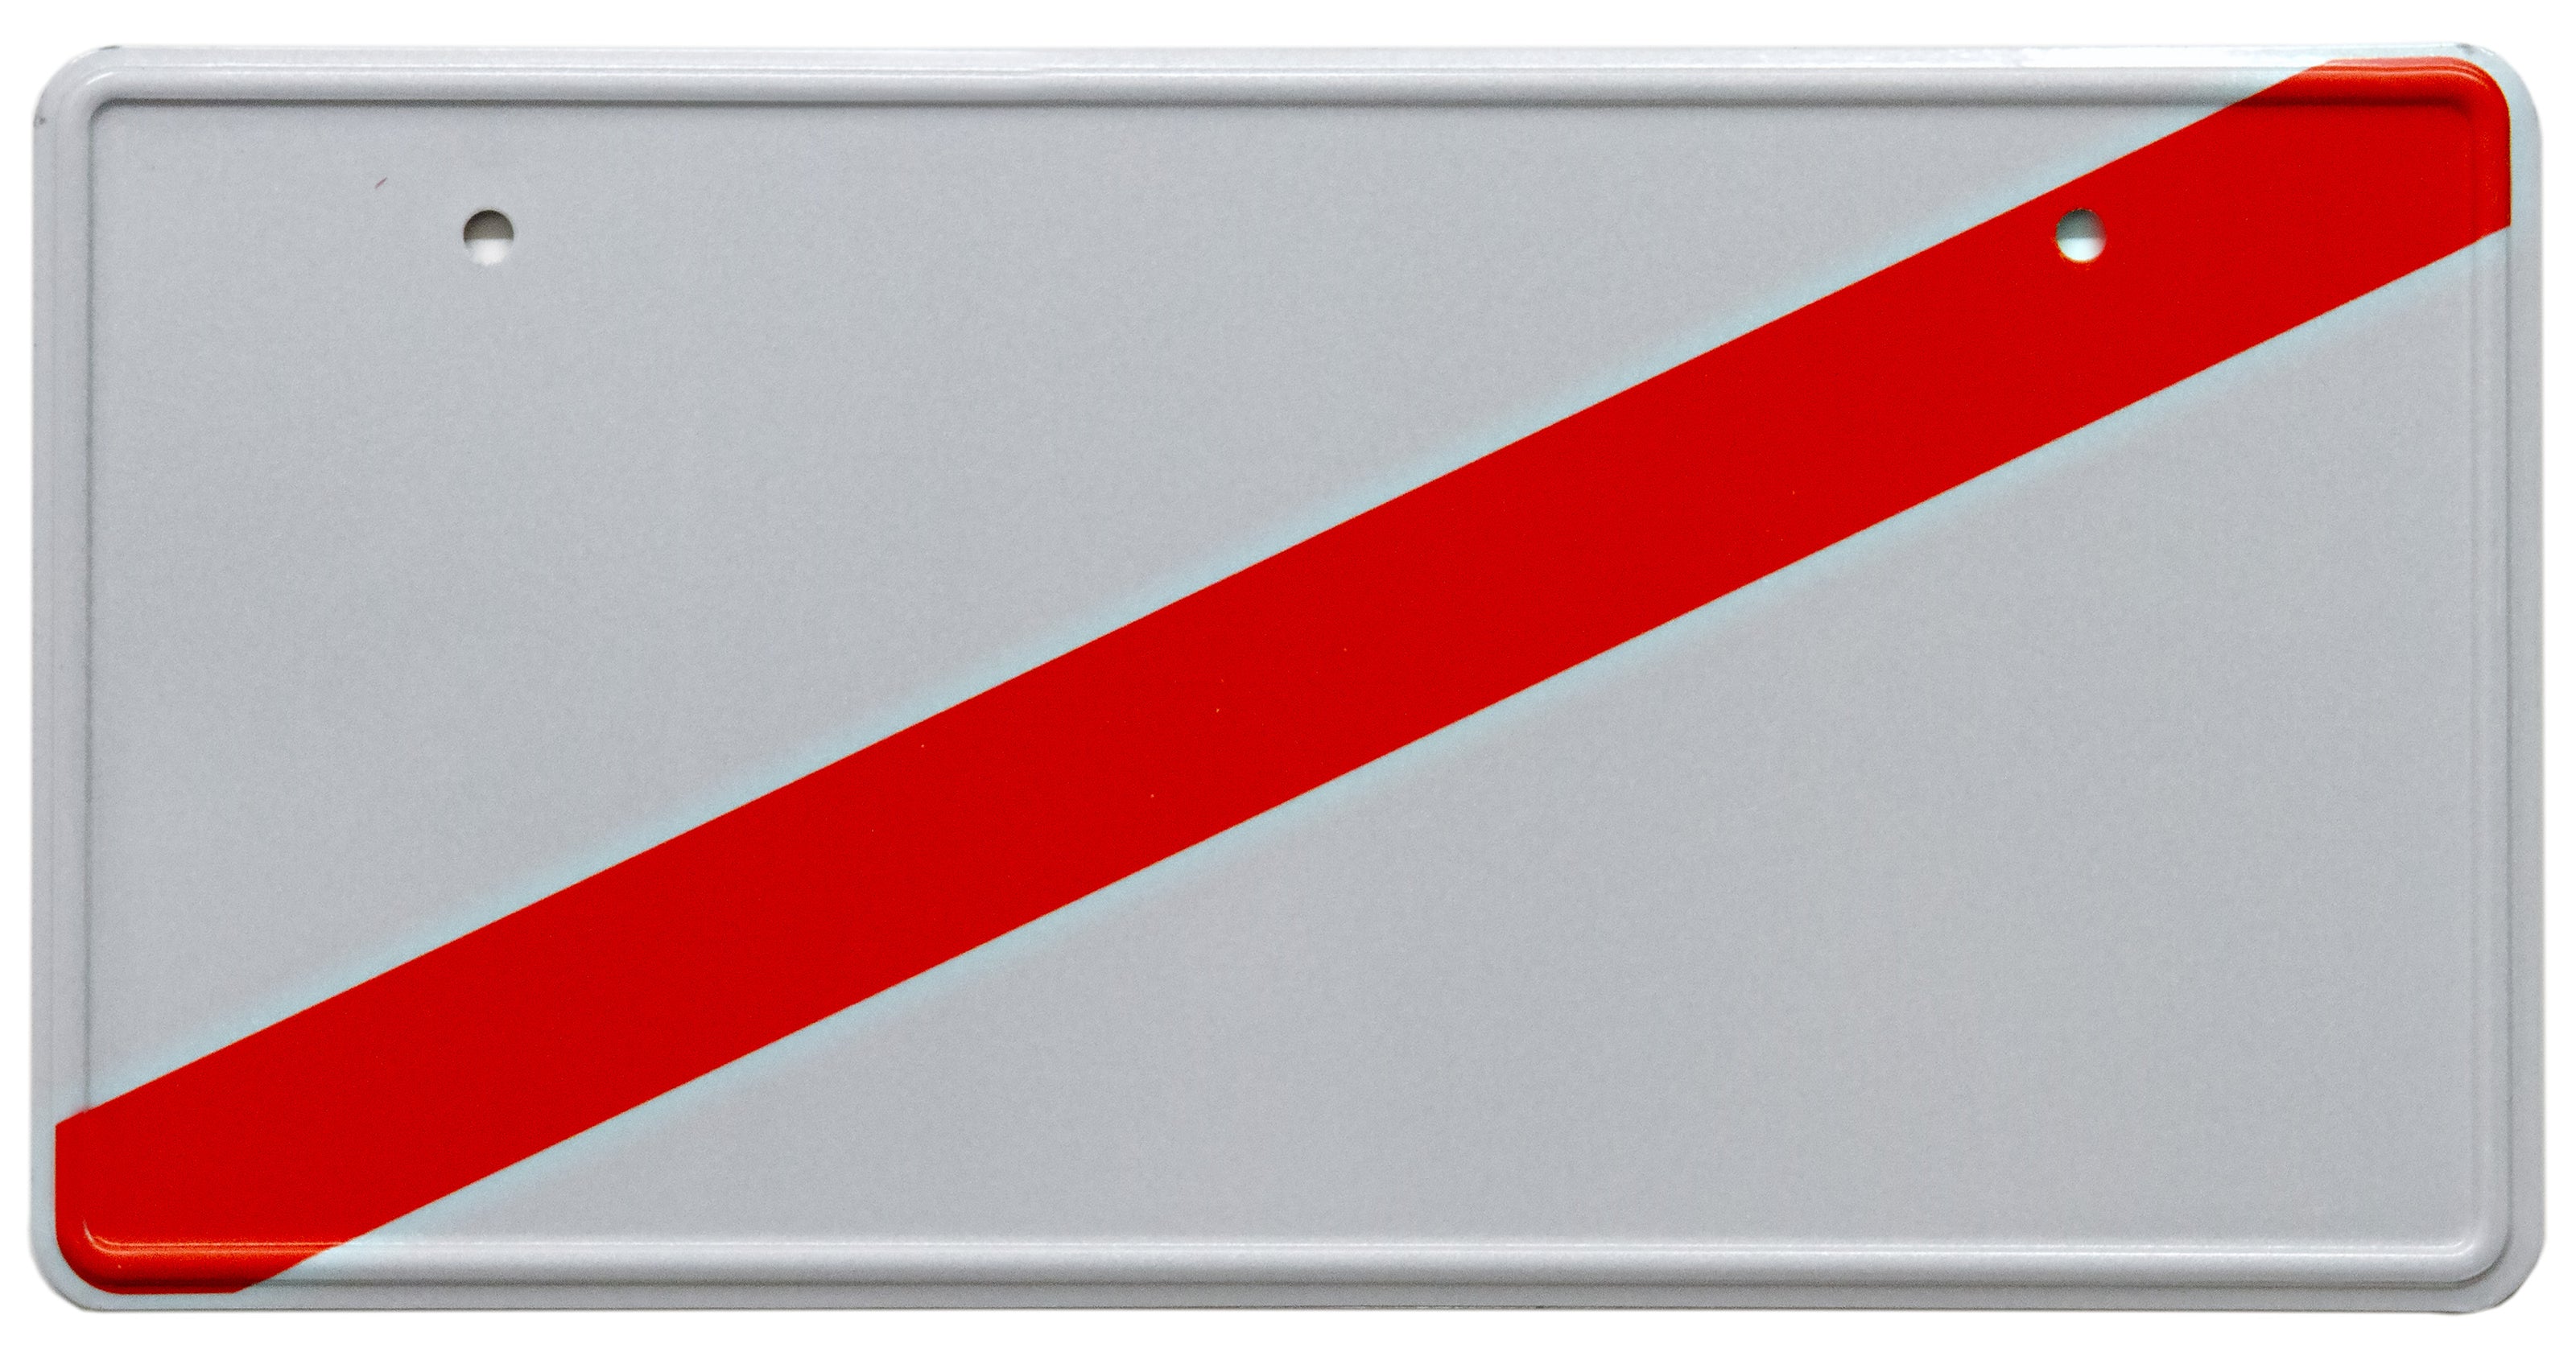 Temporary Japanese license plate